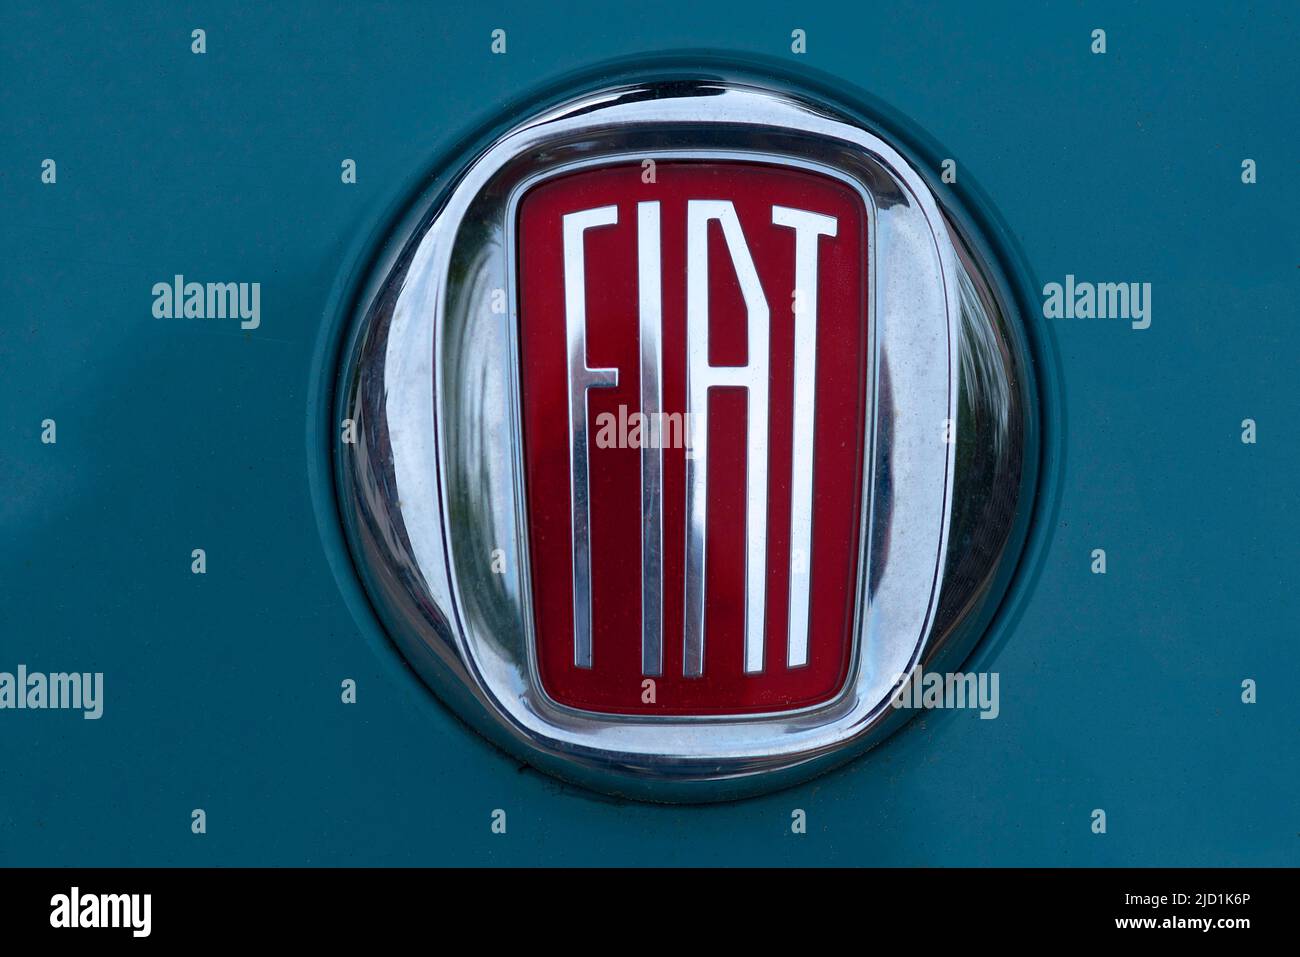 Logo of the car brand Fiat, Bavaria, Germany Stock Photo